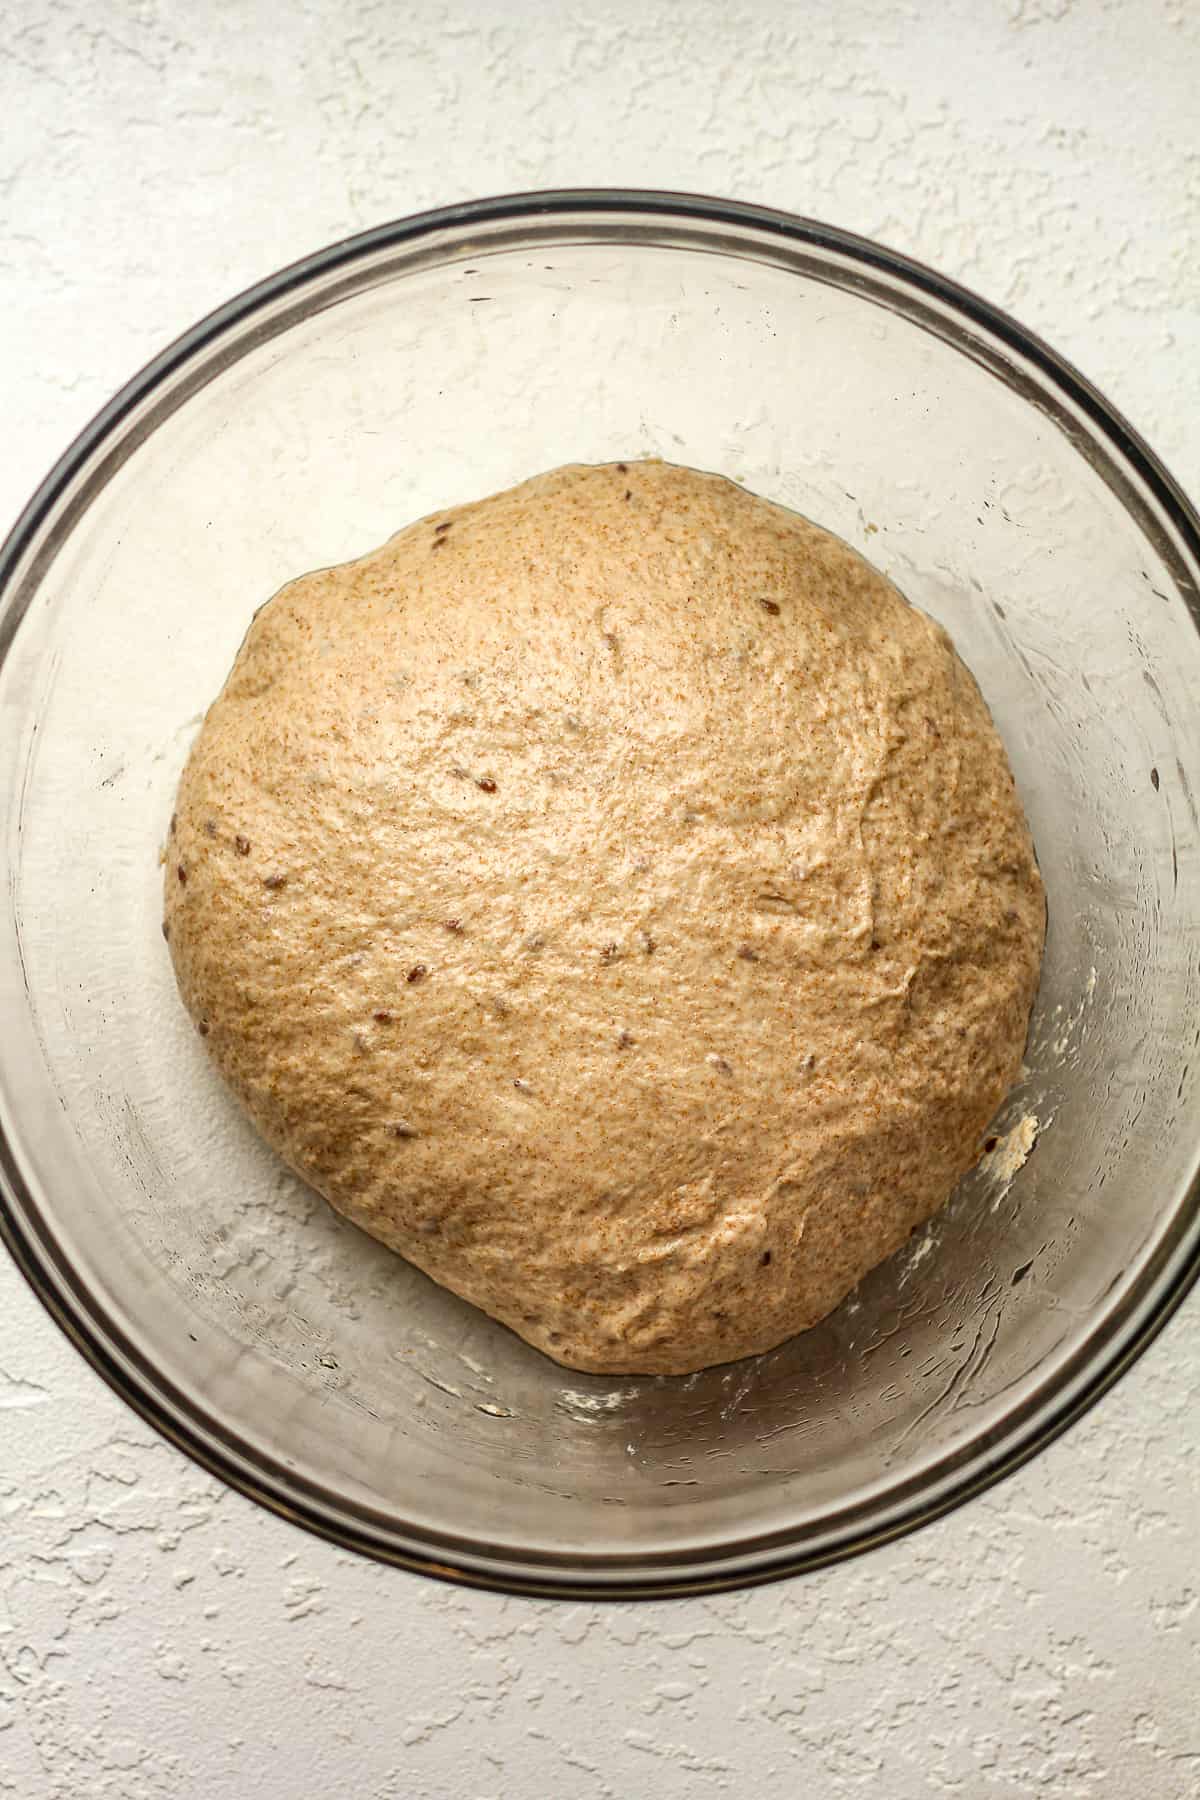 A bowl of the wheat bread dough.